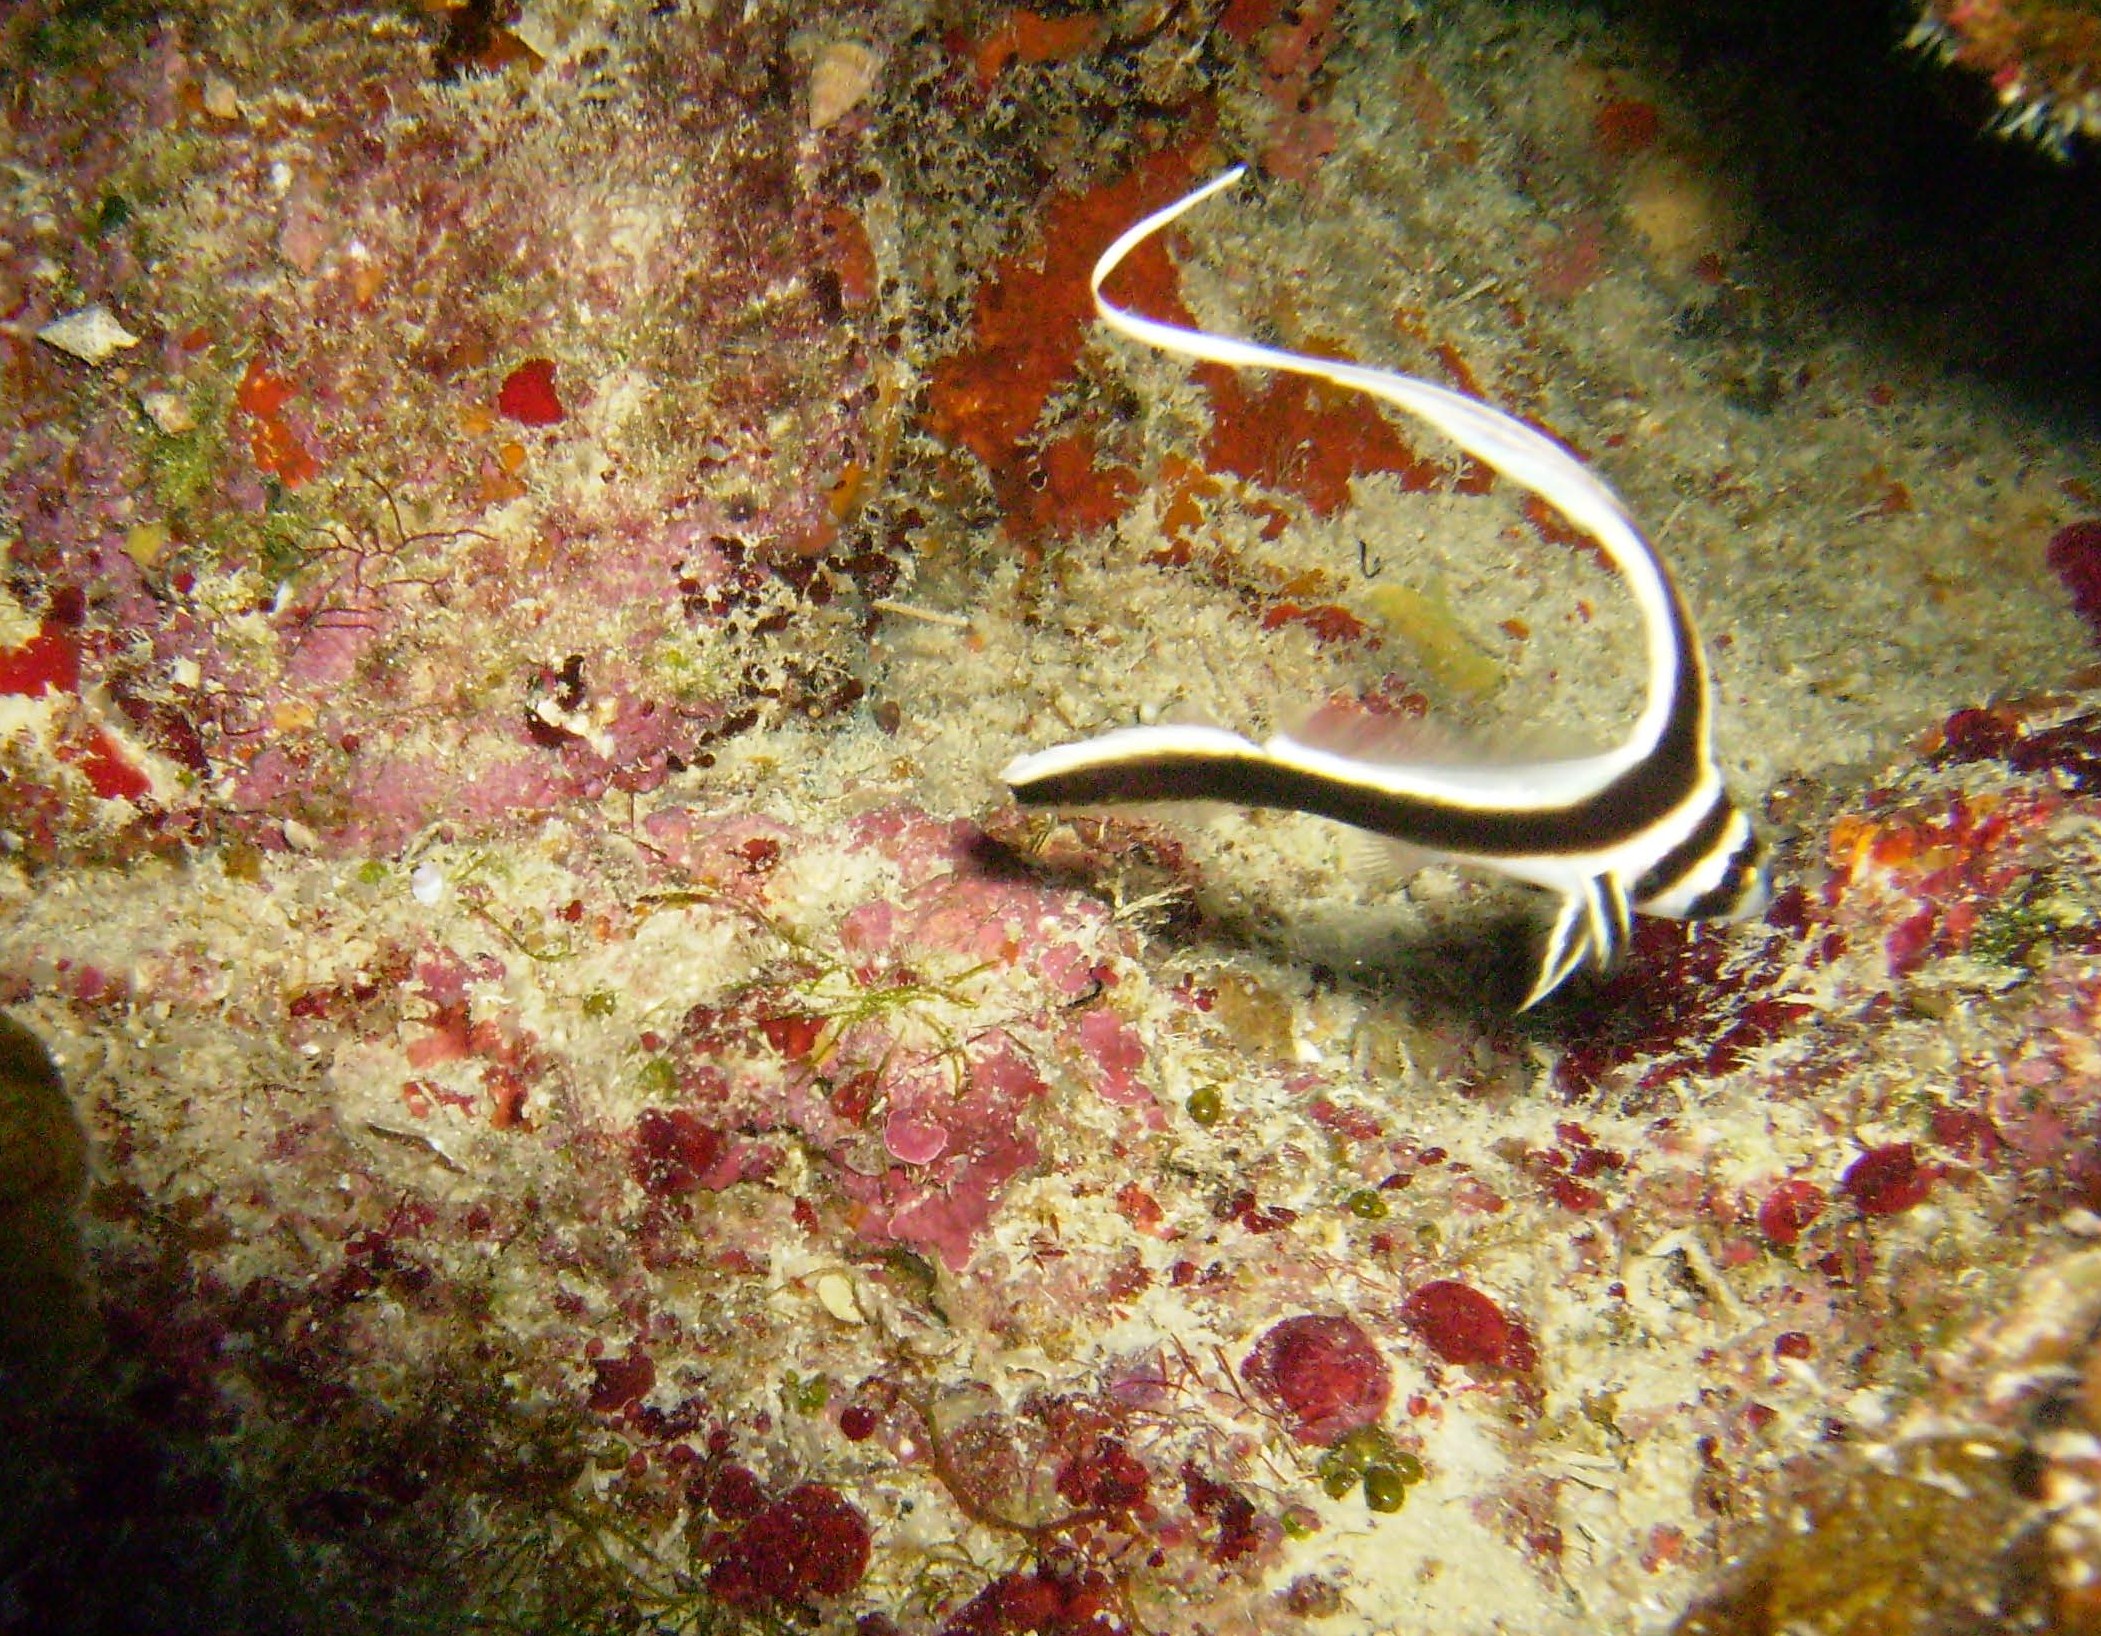 Juvenile drumfish